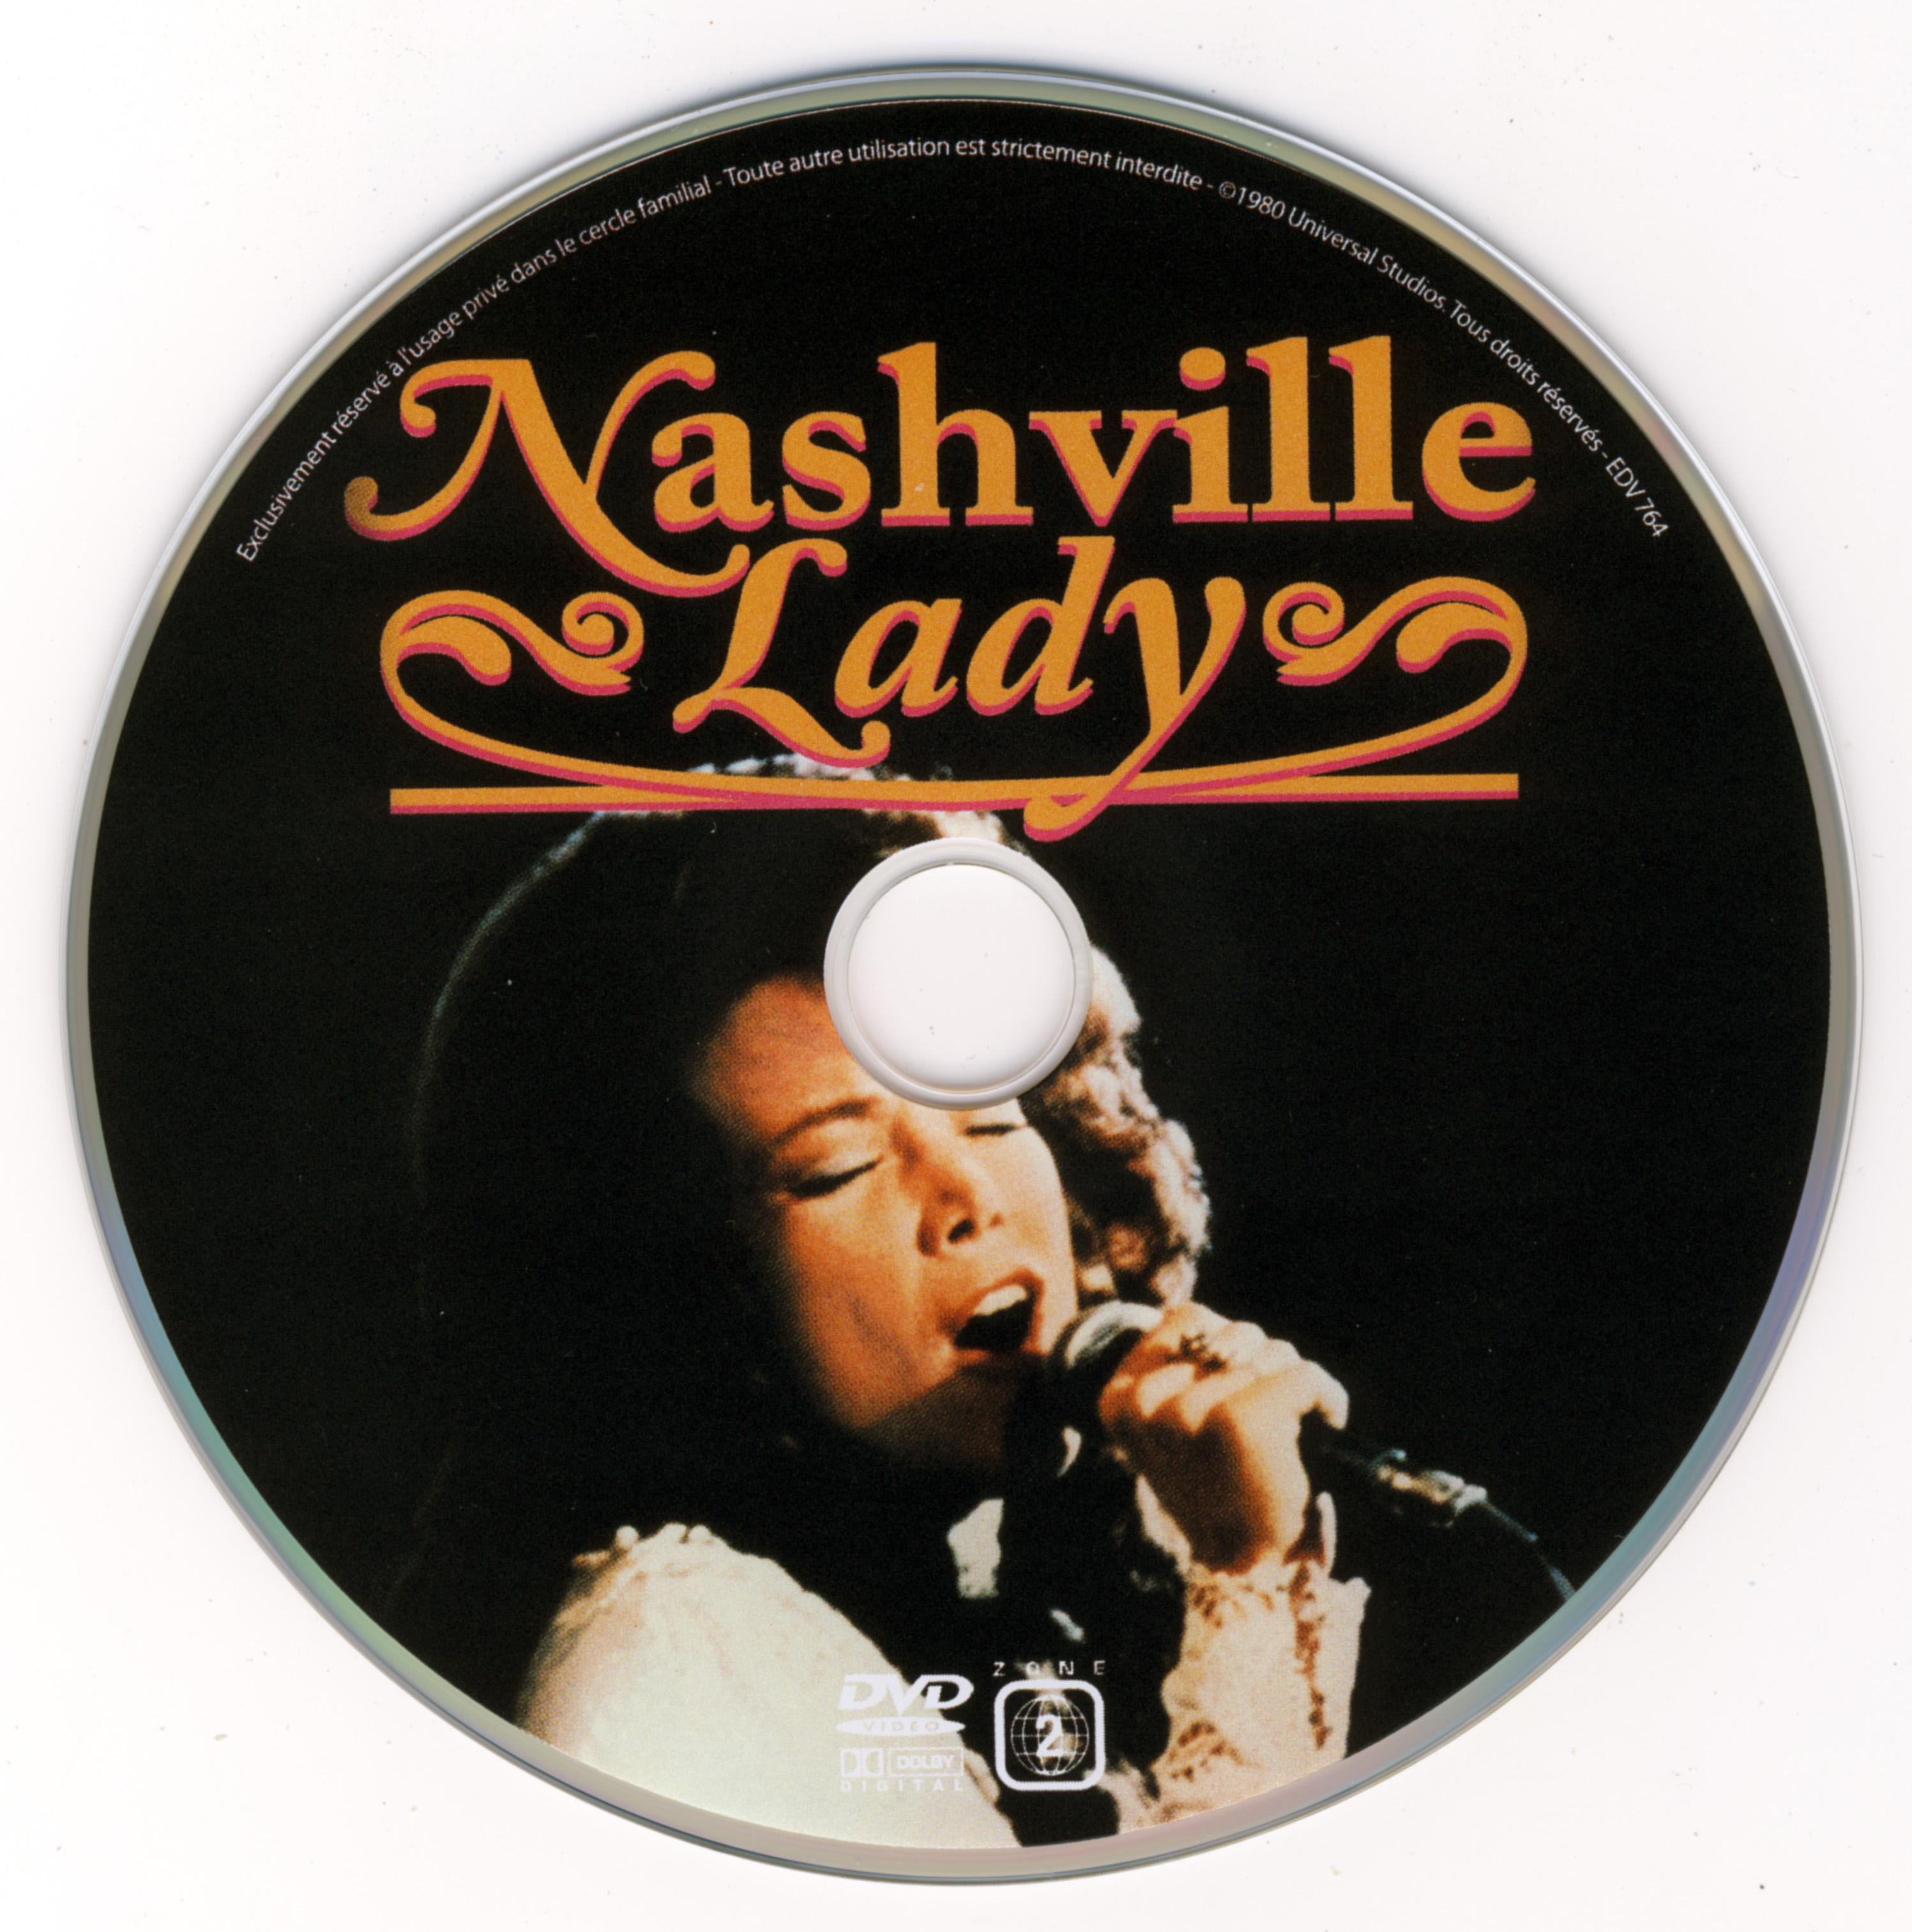 Nashville lady